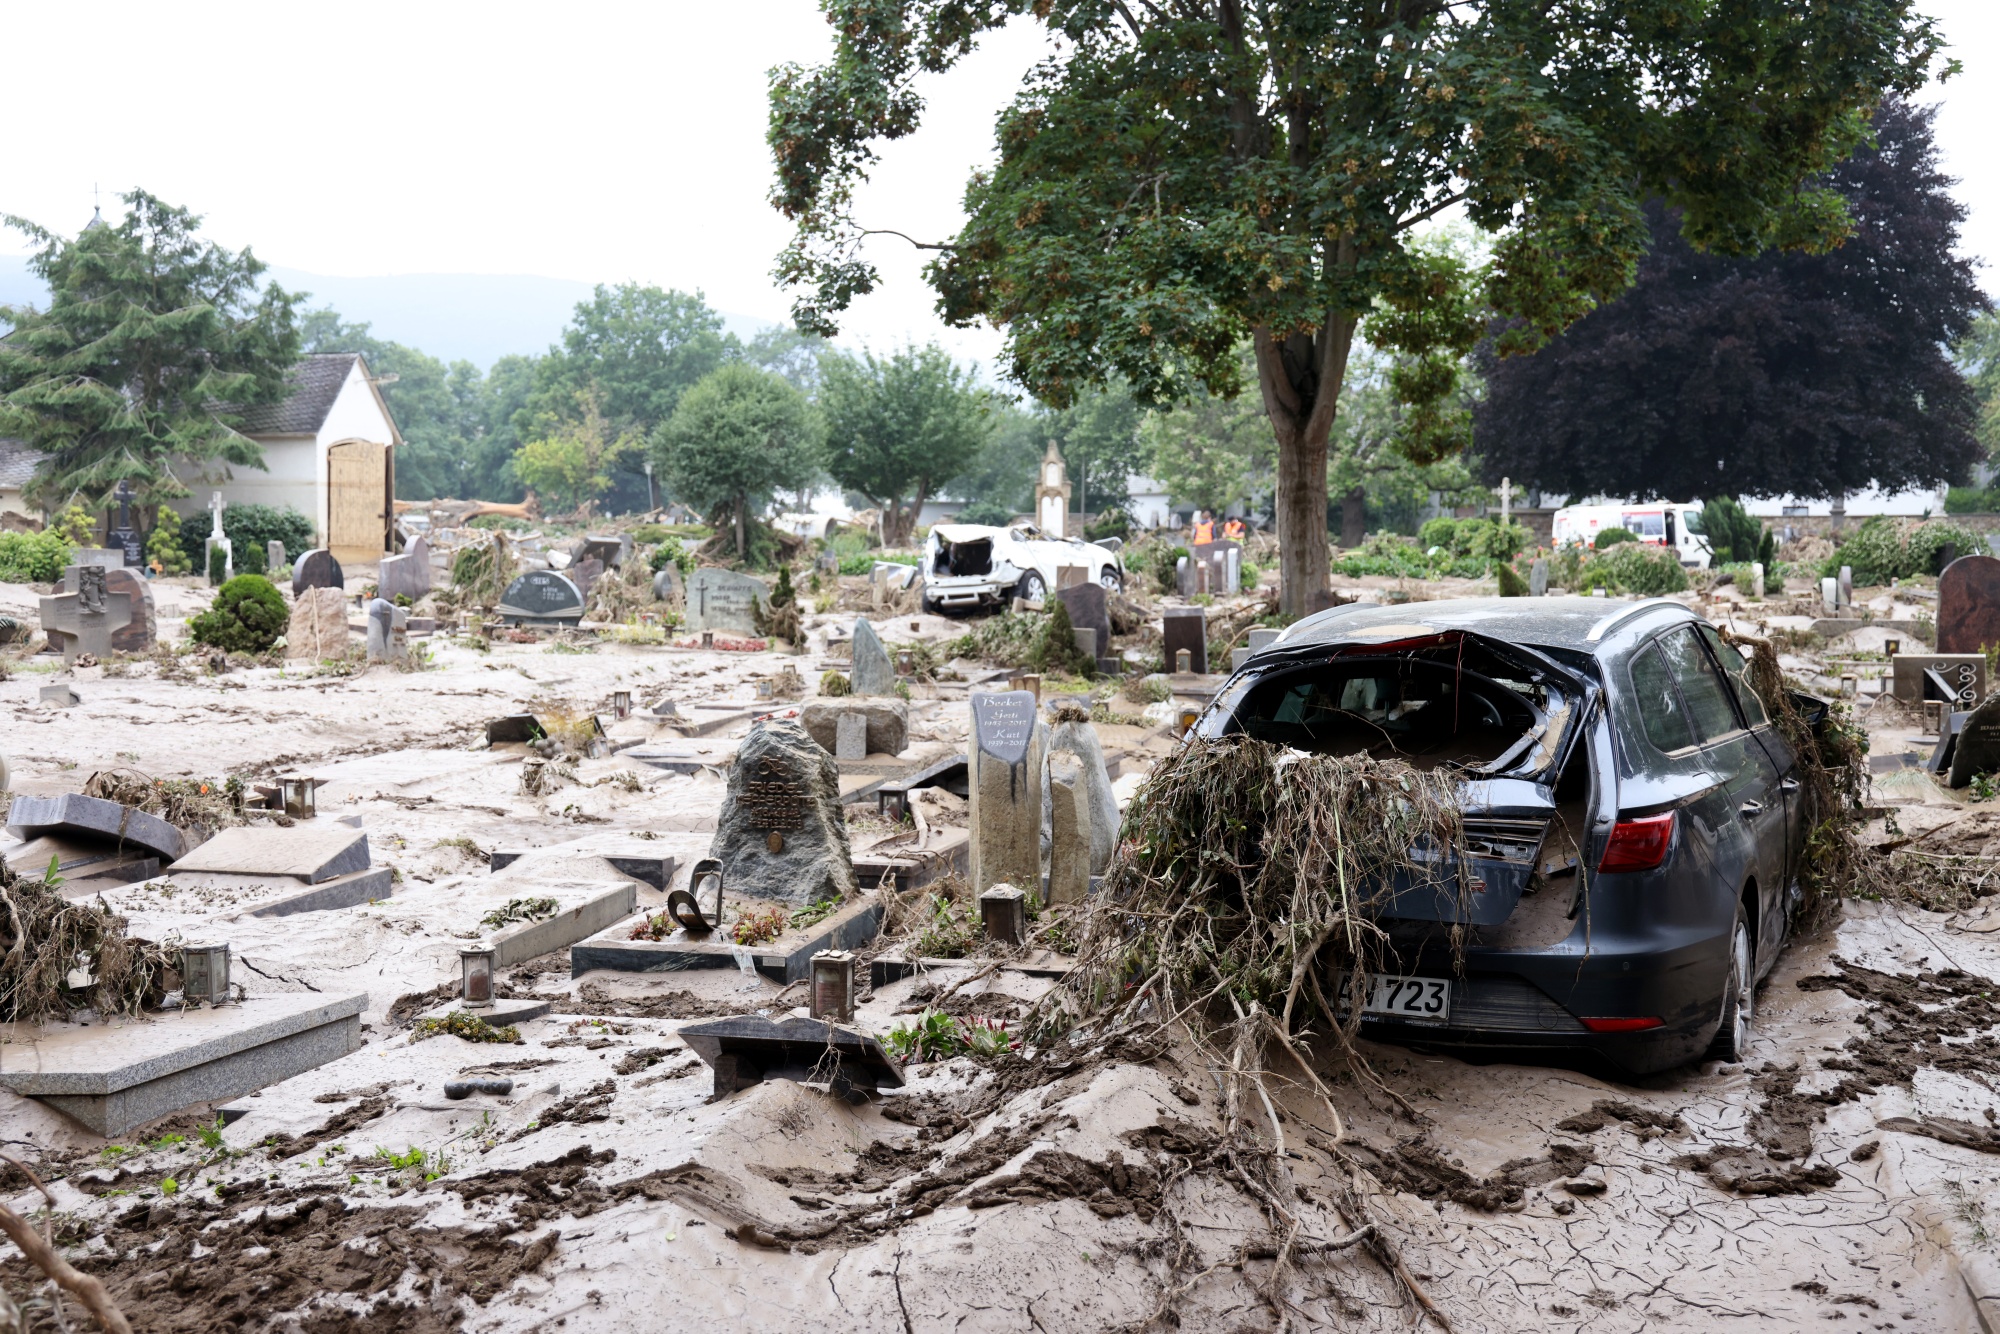 In July, unprecedented floods tore through Bad Neuenahr-Ahrweiler, Germany, including this cemetery.